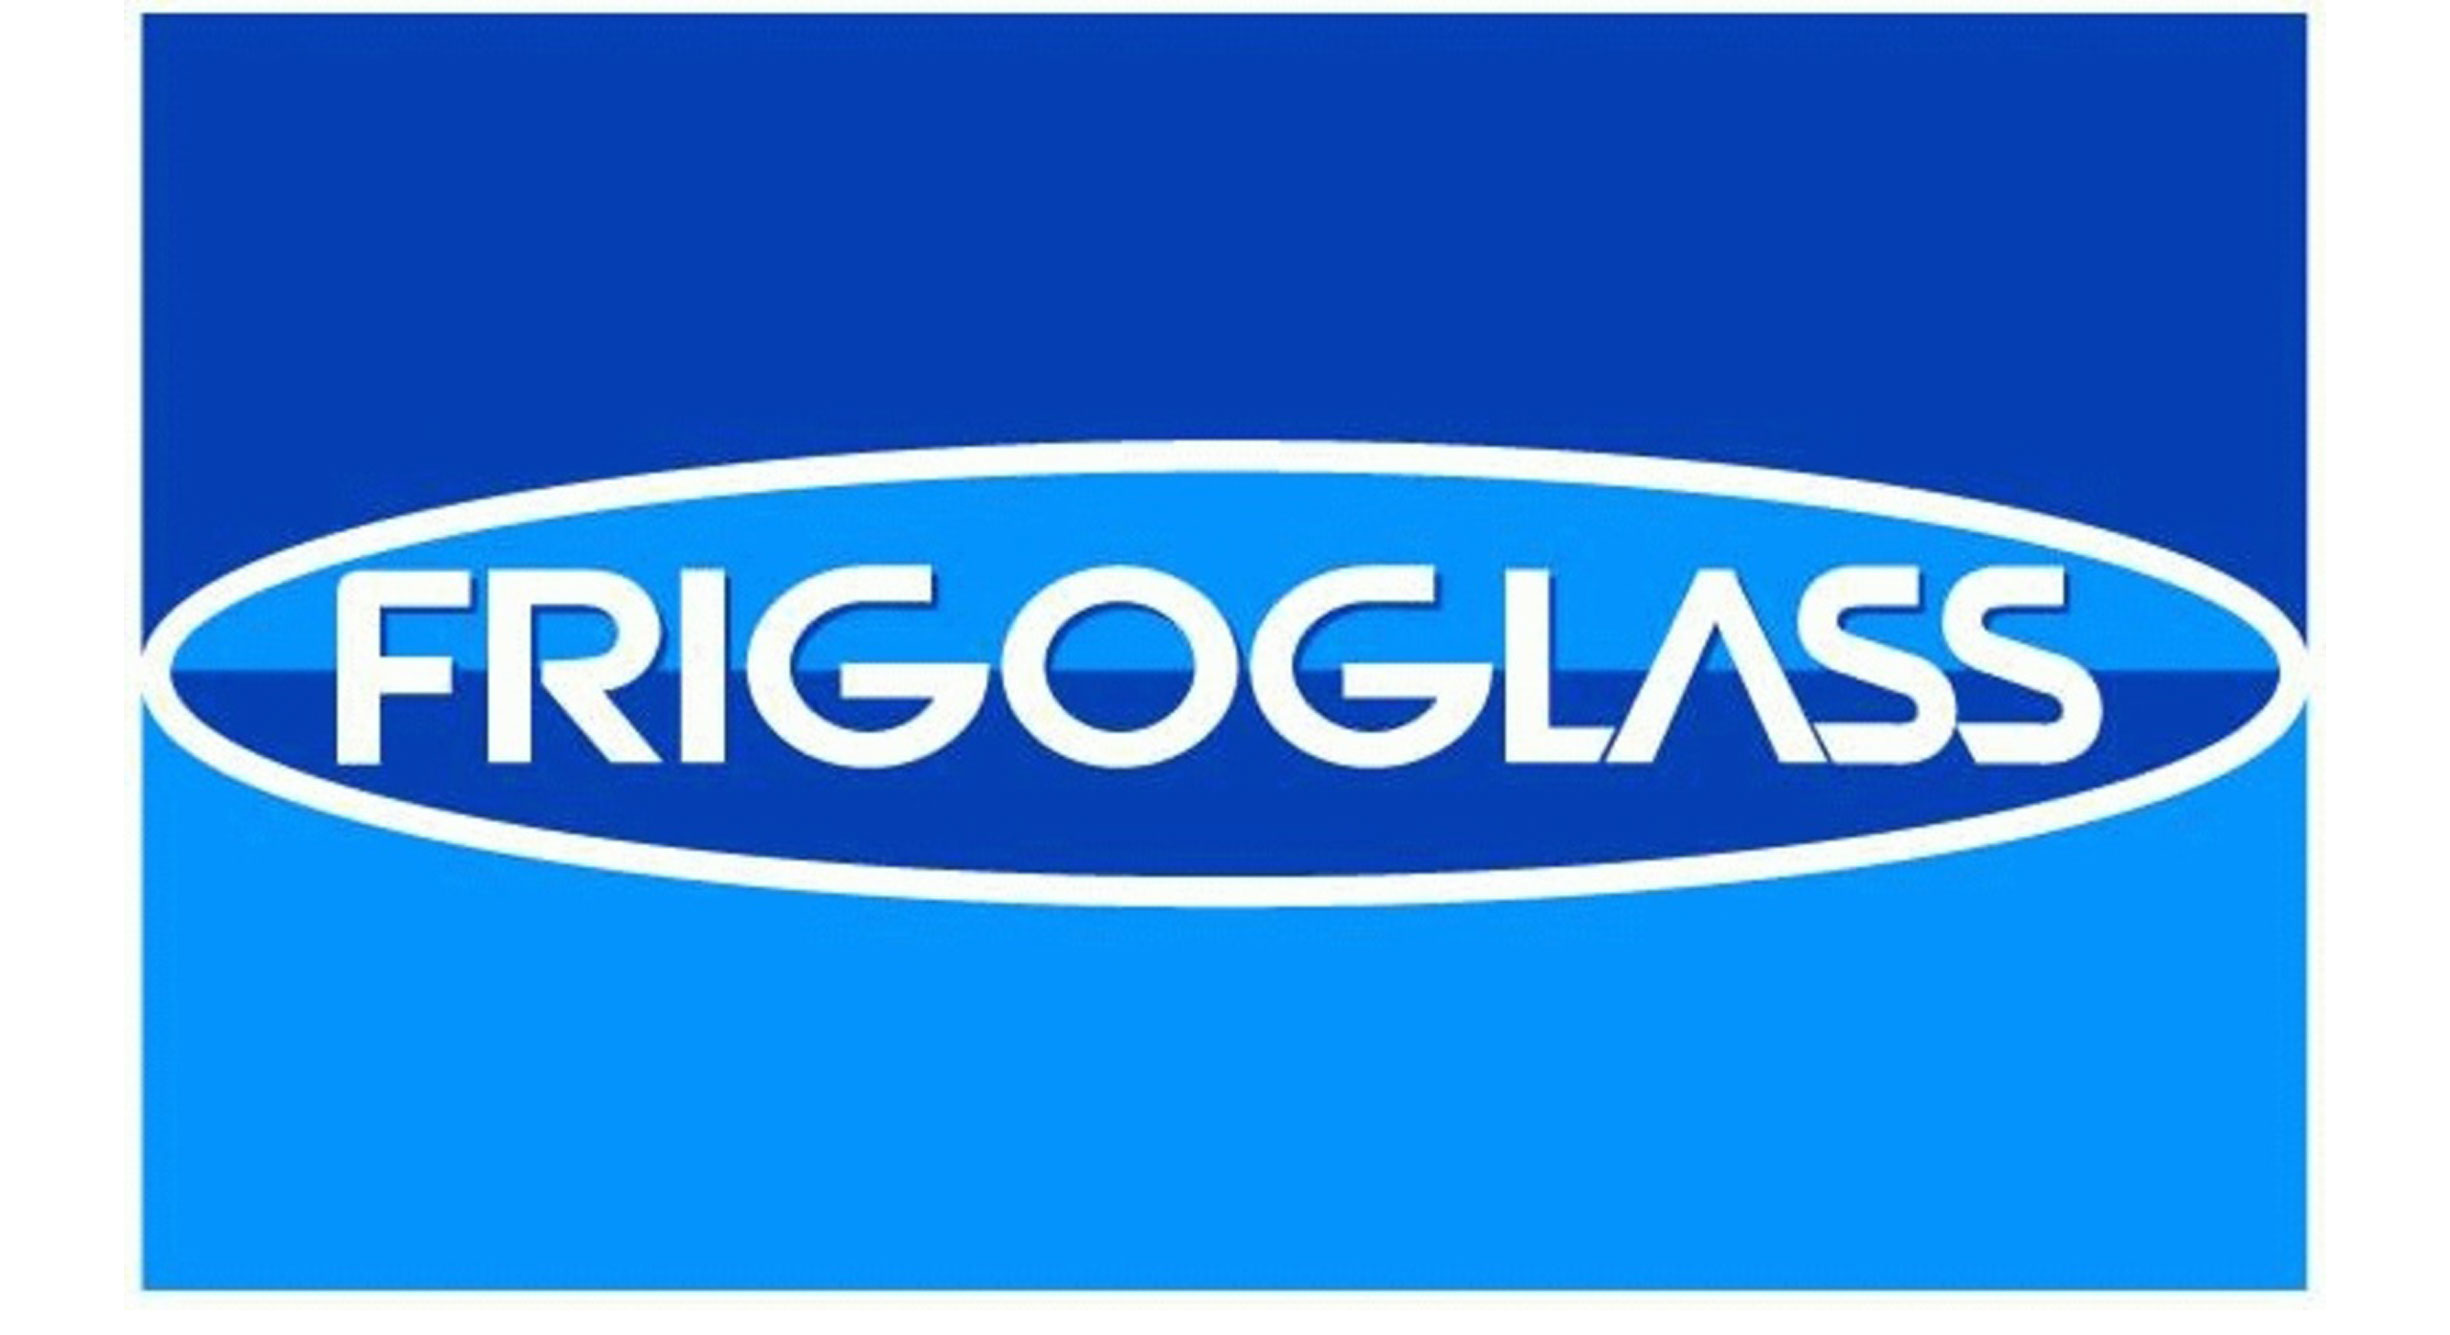 Frigoglass: Ο κορονοϊός ανέκοψε την ανοδική πορεία των πωλήσεων, το τρίμηνο